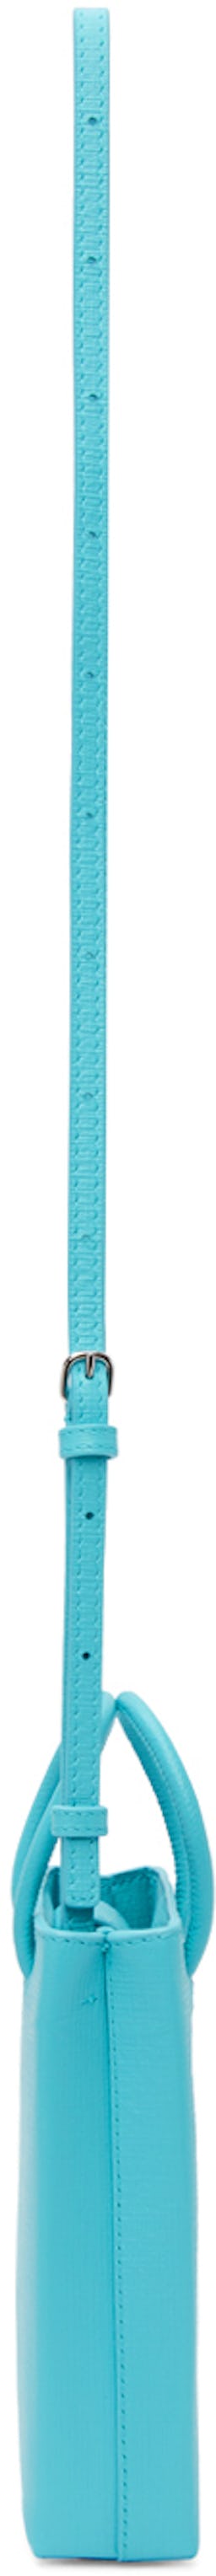 Blue Shopping Phone Holder Bag: additional image